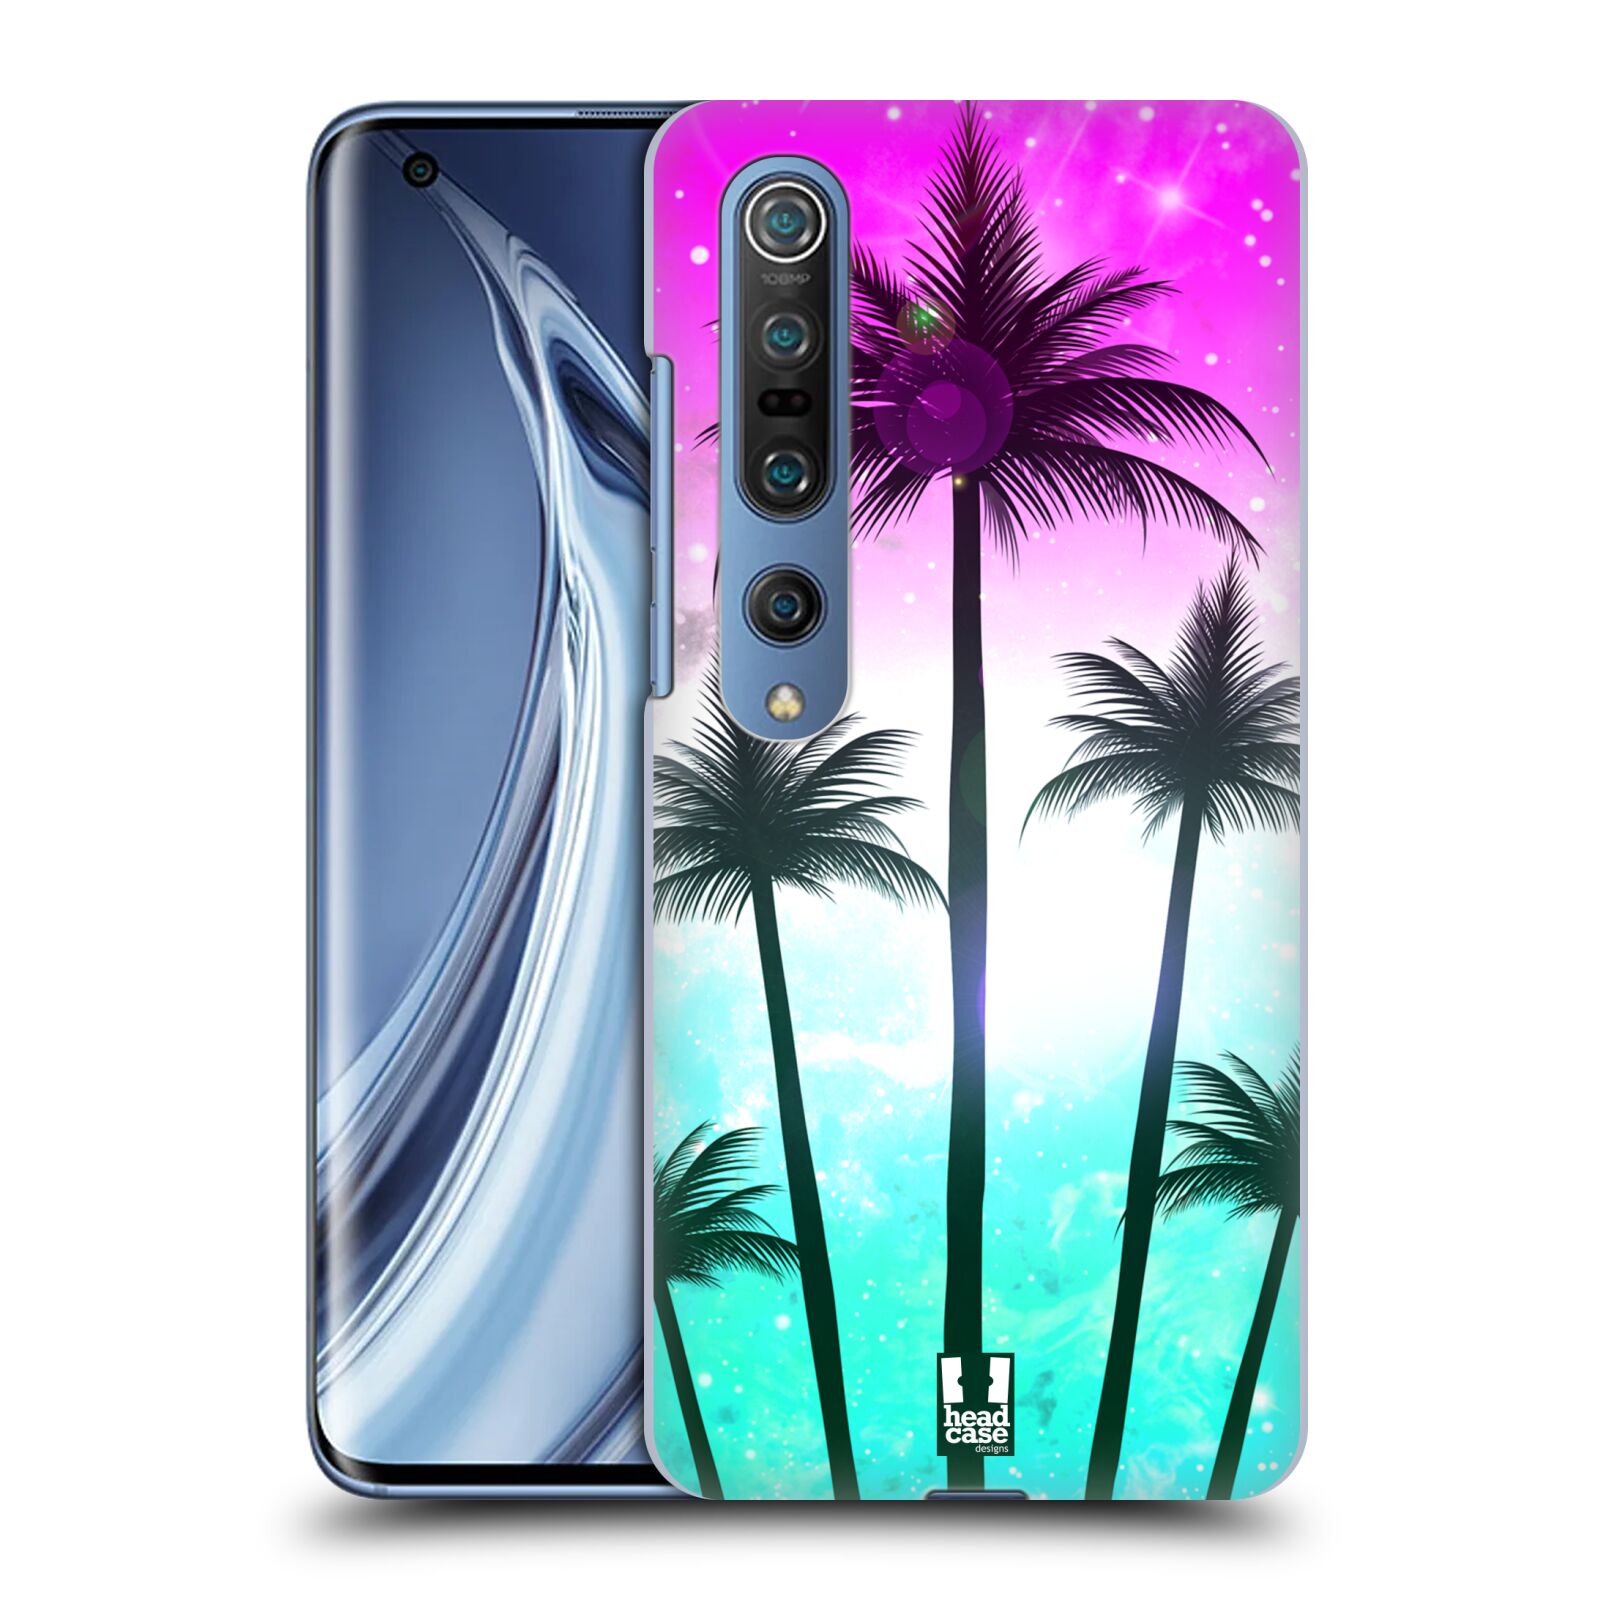 HEAD CASE plastový obal na mobil Xiaomi Mi 10 vzor Kreslený motiv silueta moře a palmy RŮŽOVÁ A TYRKYS